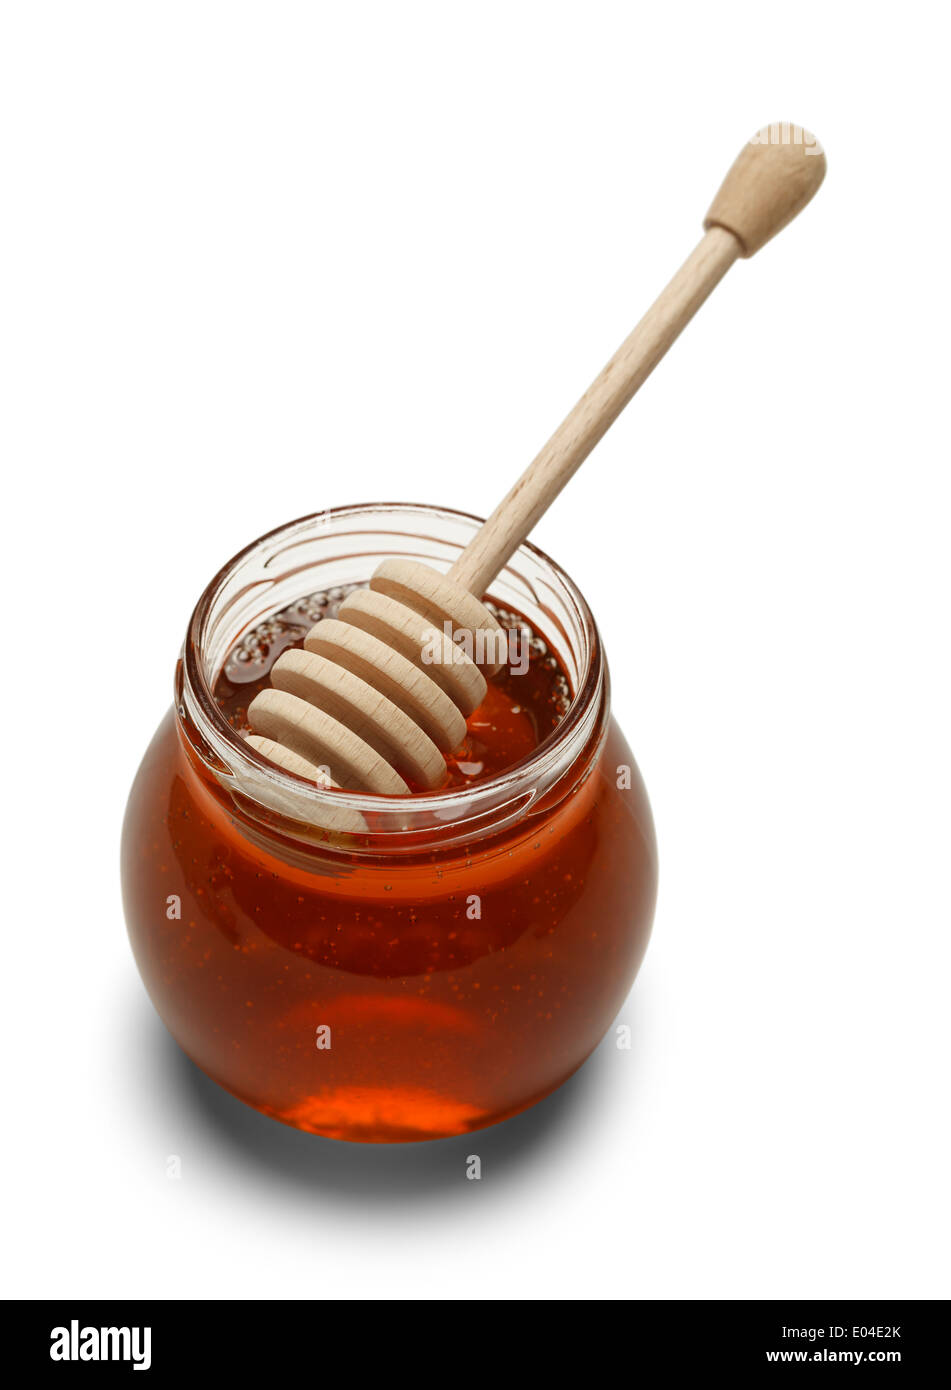 Tarro de miel con Stir Stick aislado sobre fondo blanco. Foto de stock